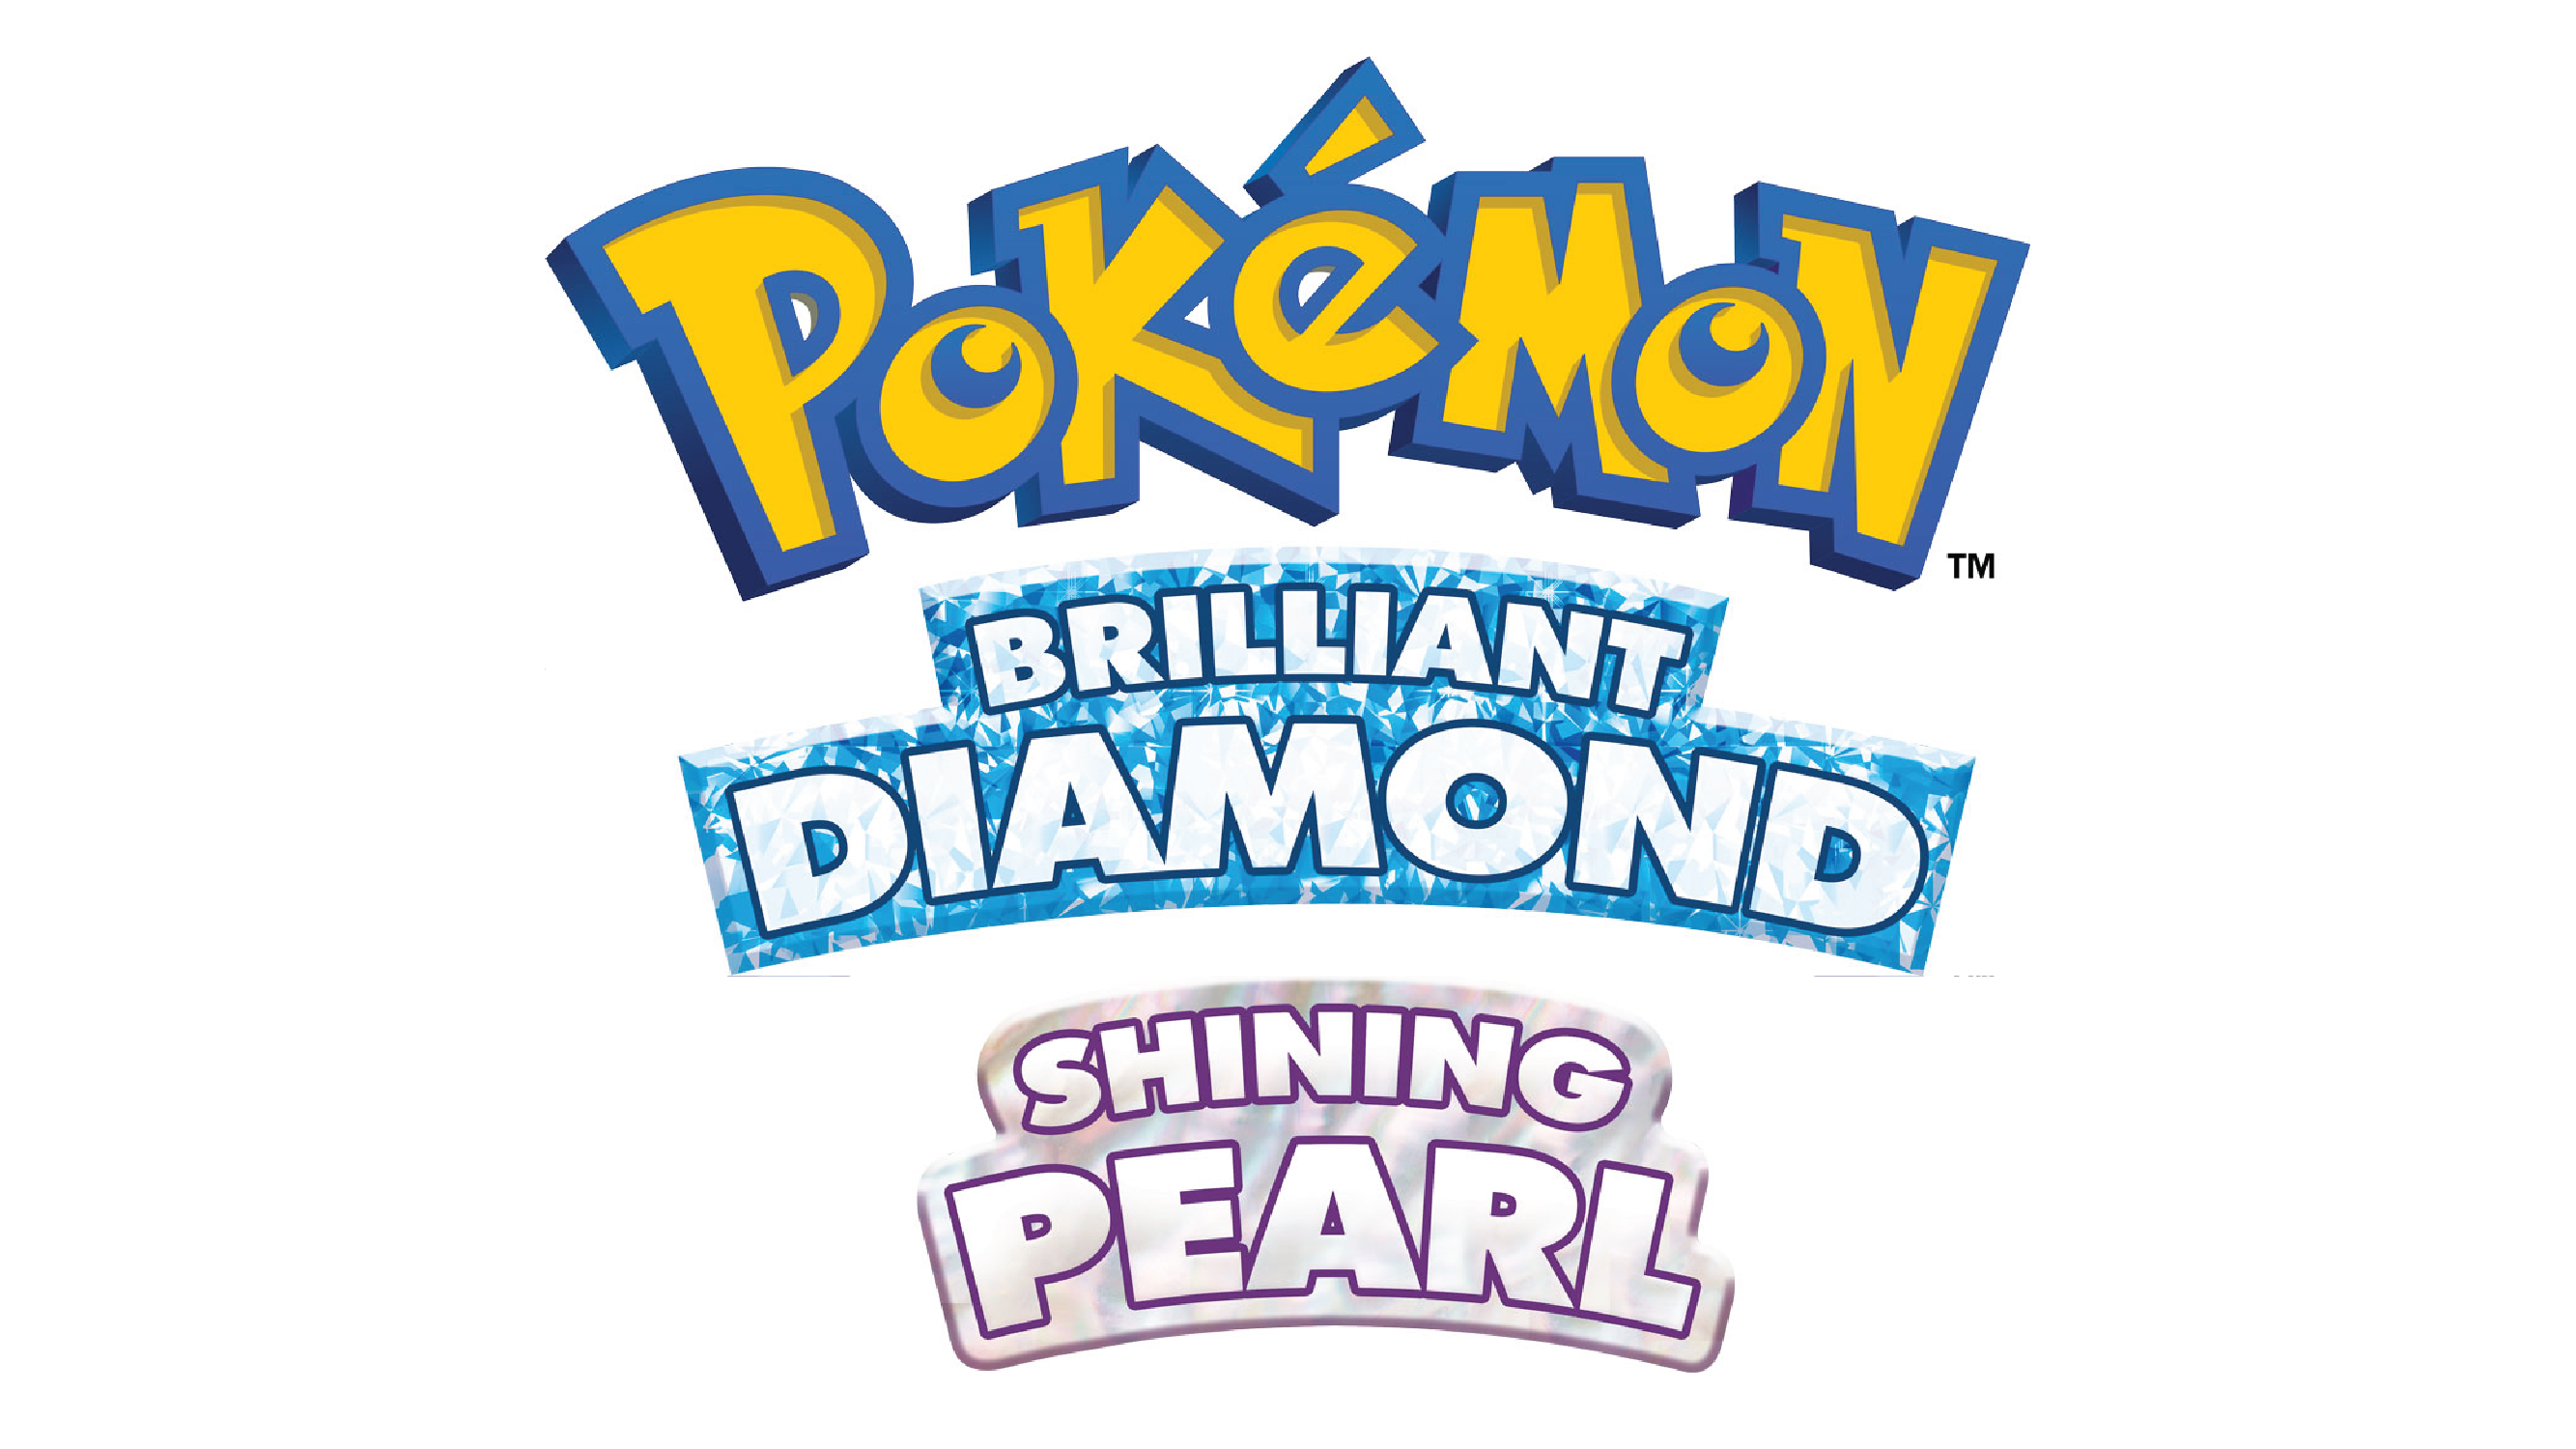 Pokemon Brilliant Diamond & Shining Pearl coming to Nintendo Switch in late  2021